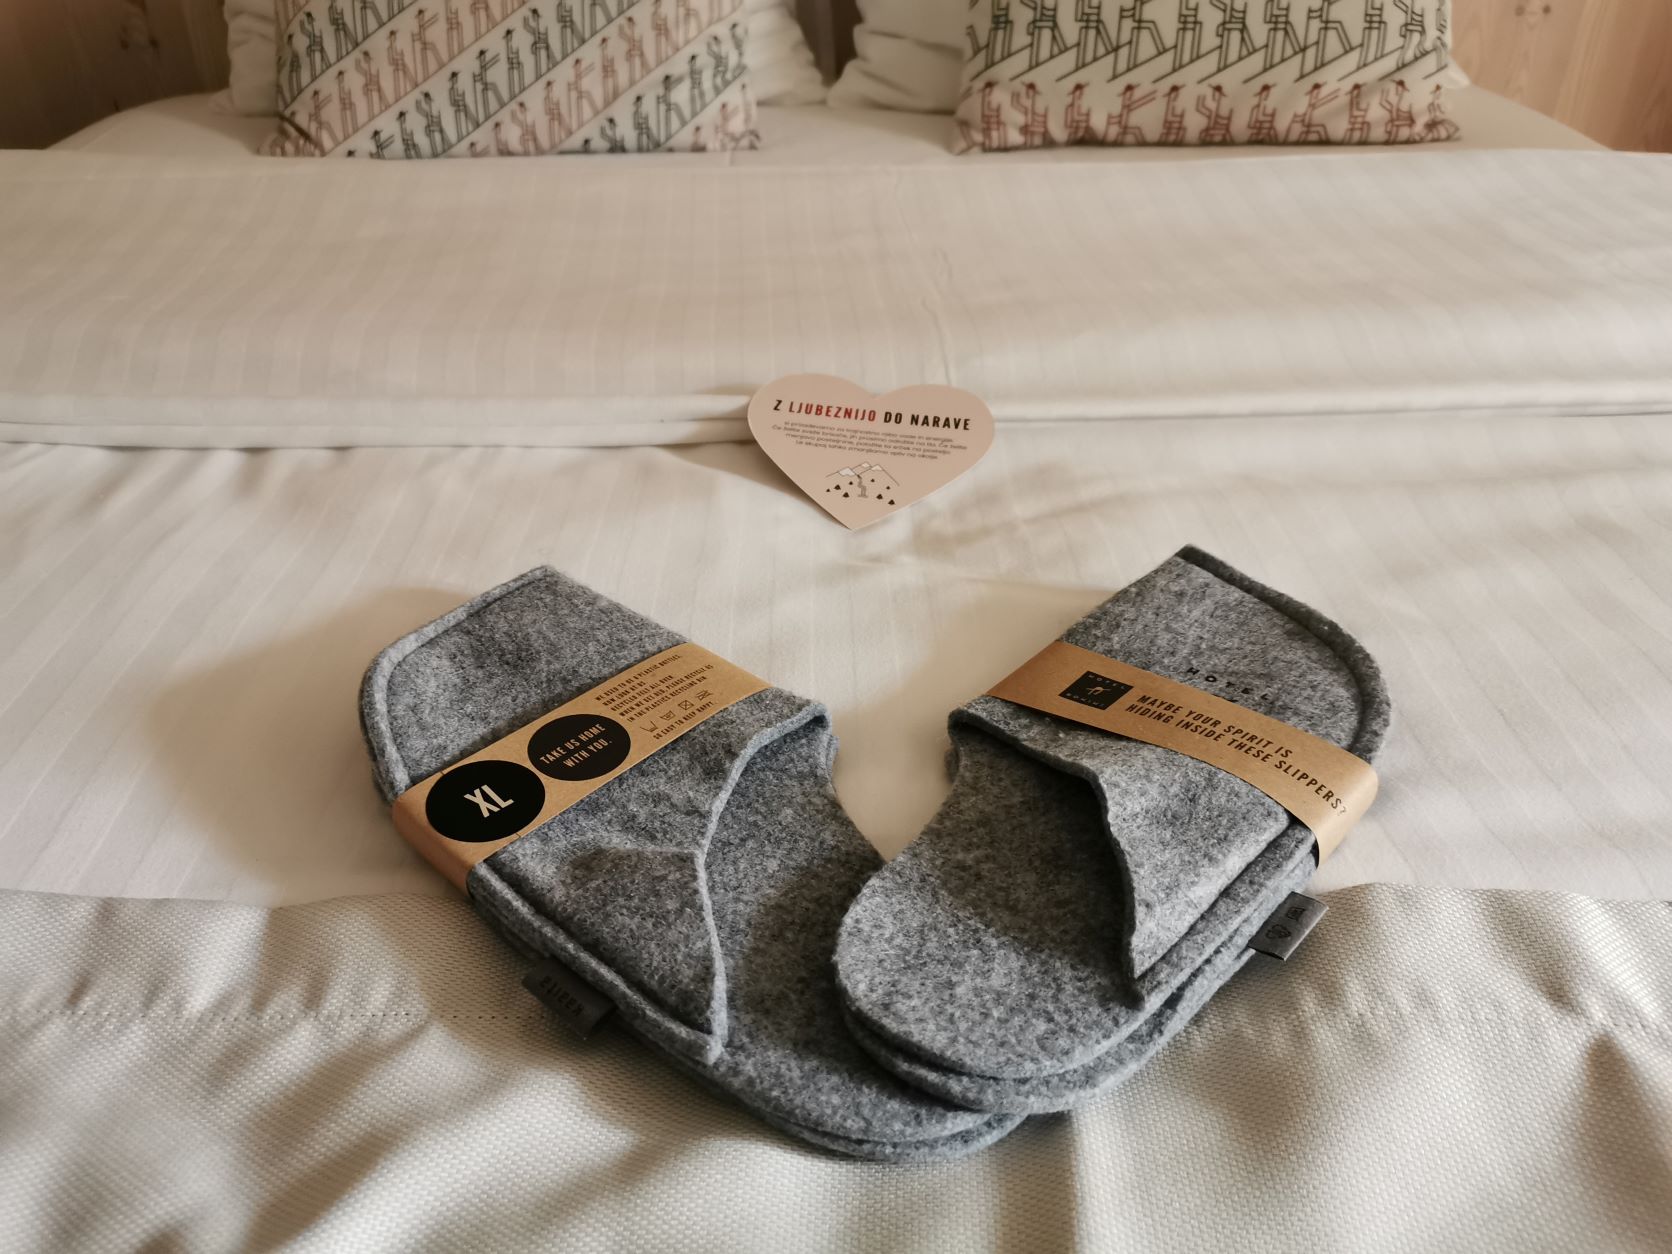 Hotel Bohinj slippers